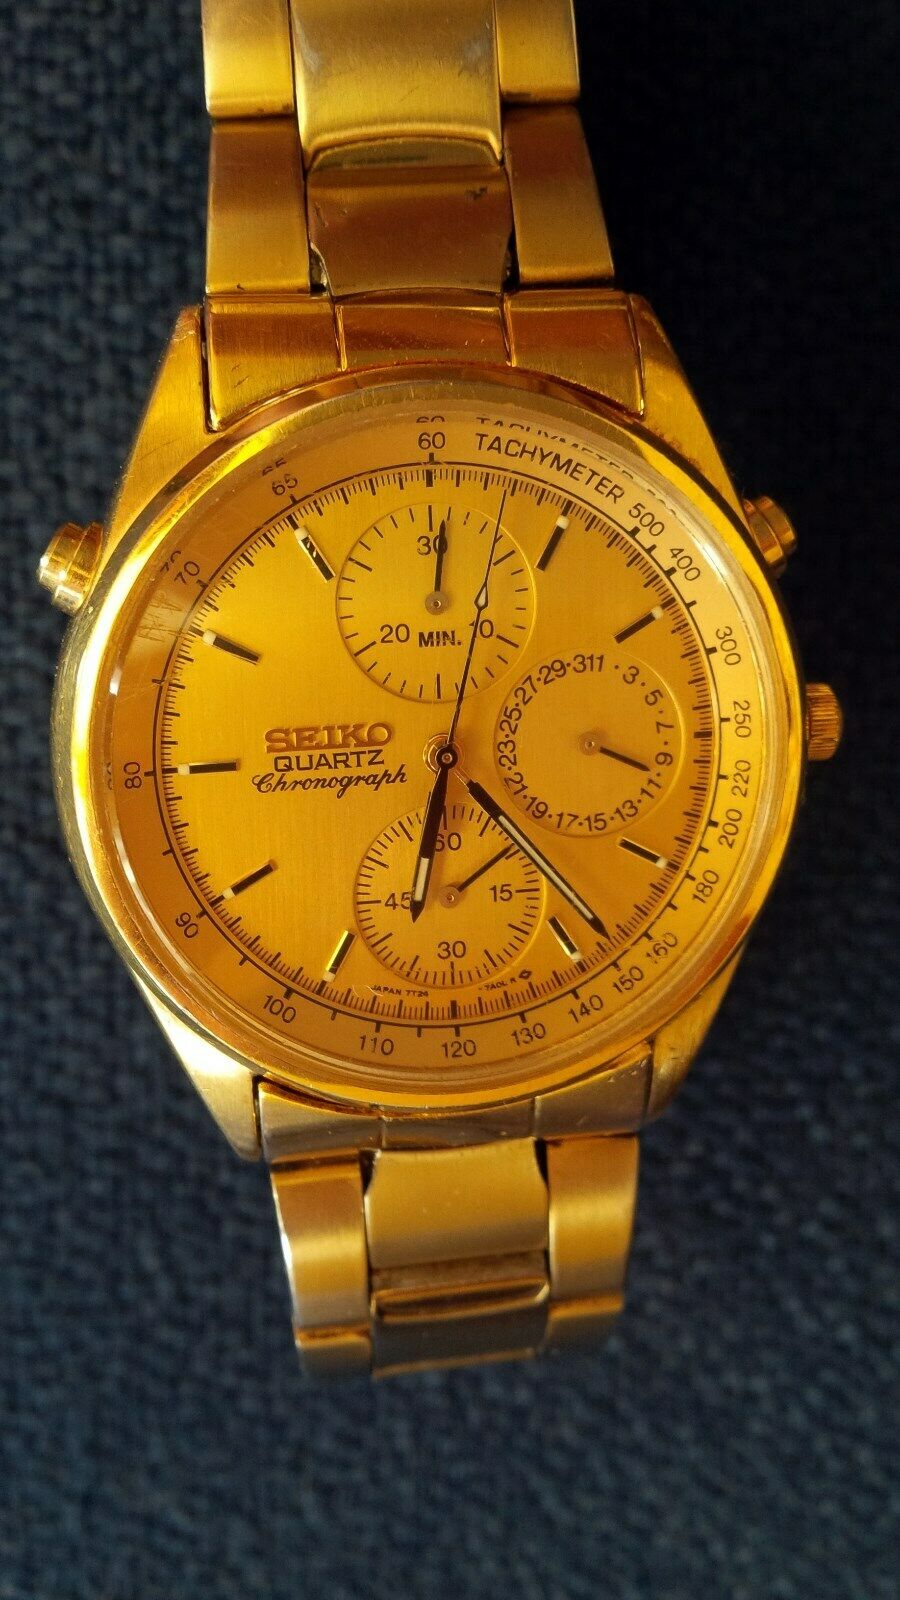 Seiko men's wrist watch quartz chronograph, model 7T24-7A00 gold tone |  WatchCharts